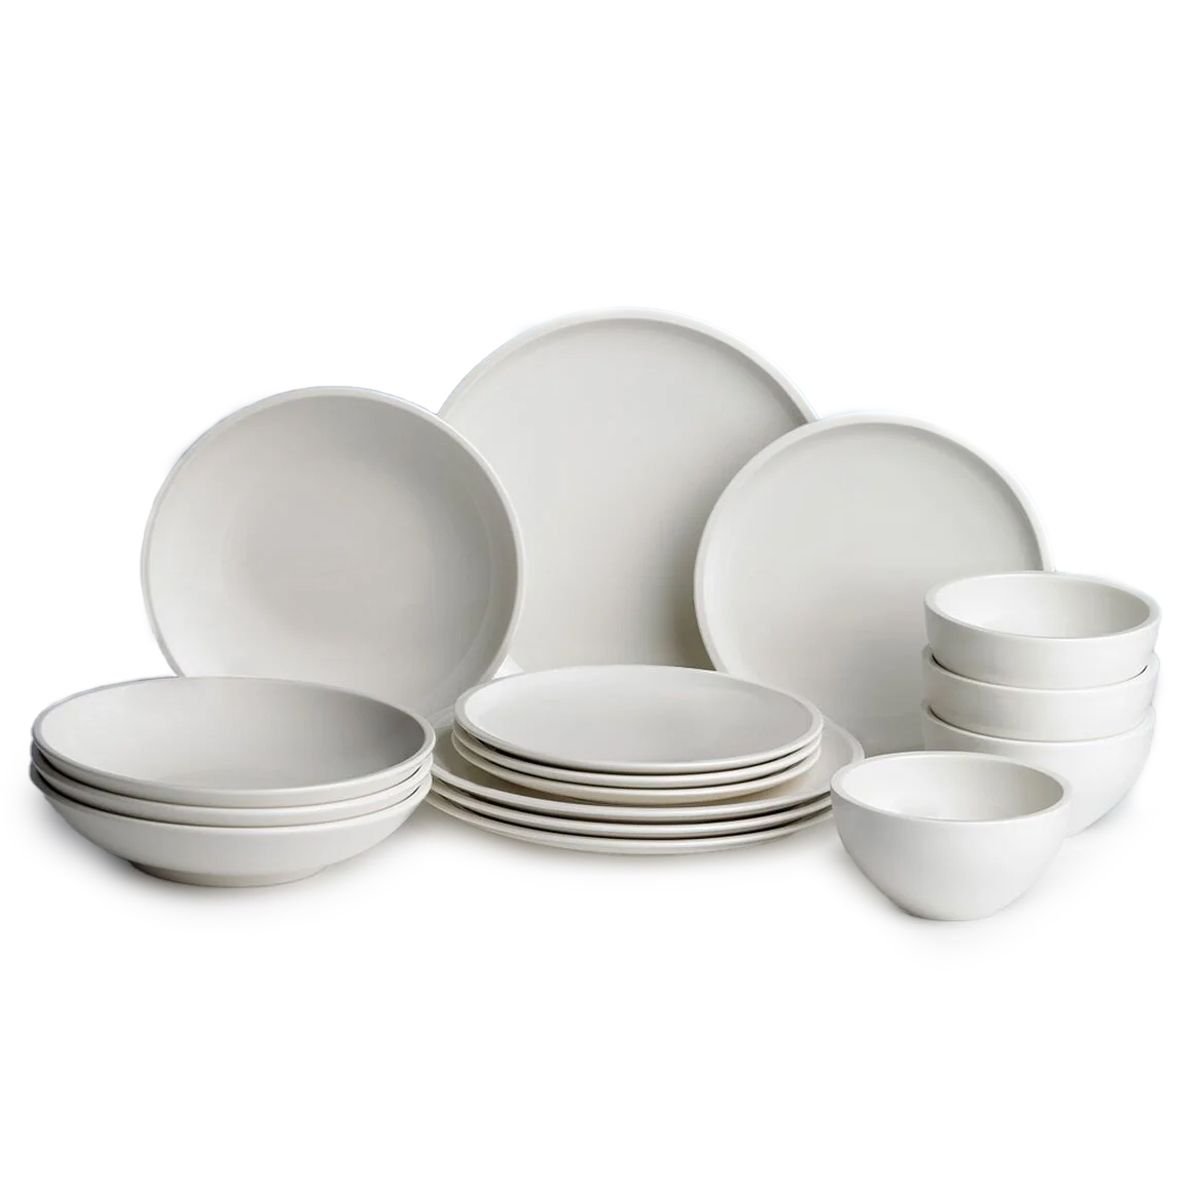 Villeroy & Boch Artesano 4-Piece Casual White Porcelain Dinnerware Set  (Service for 1) 1041307052 - The Home Depot